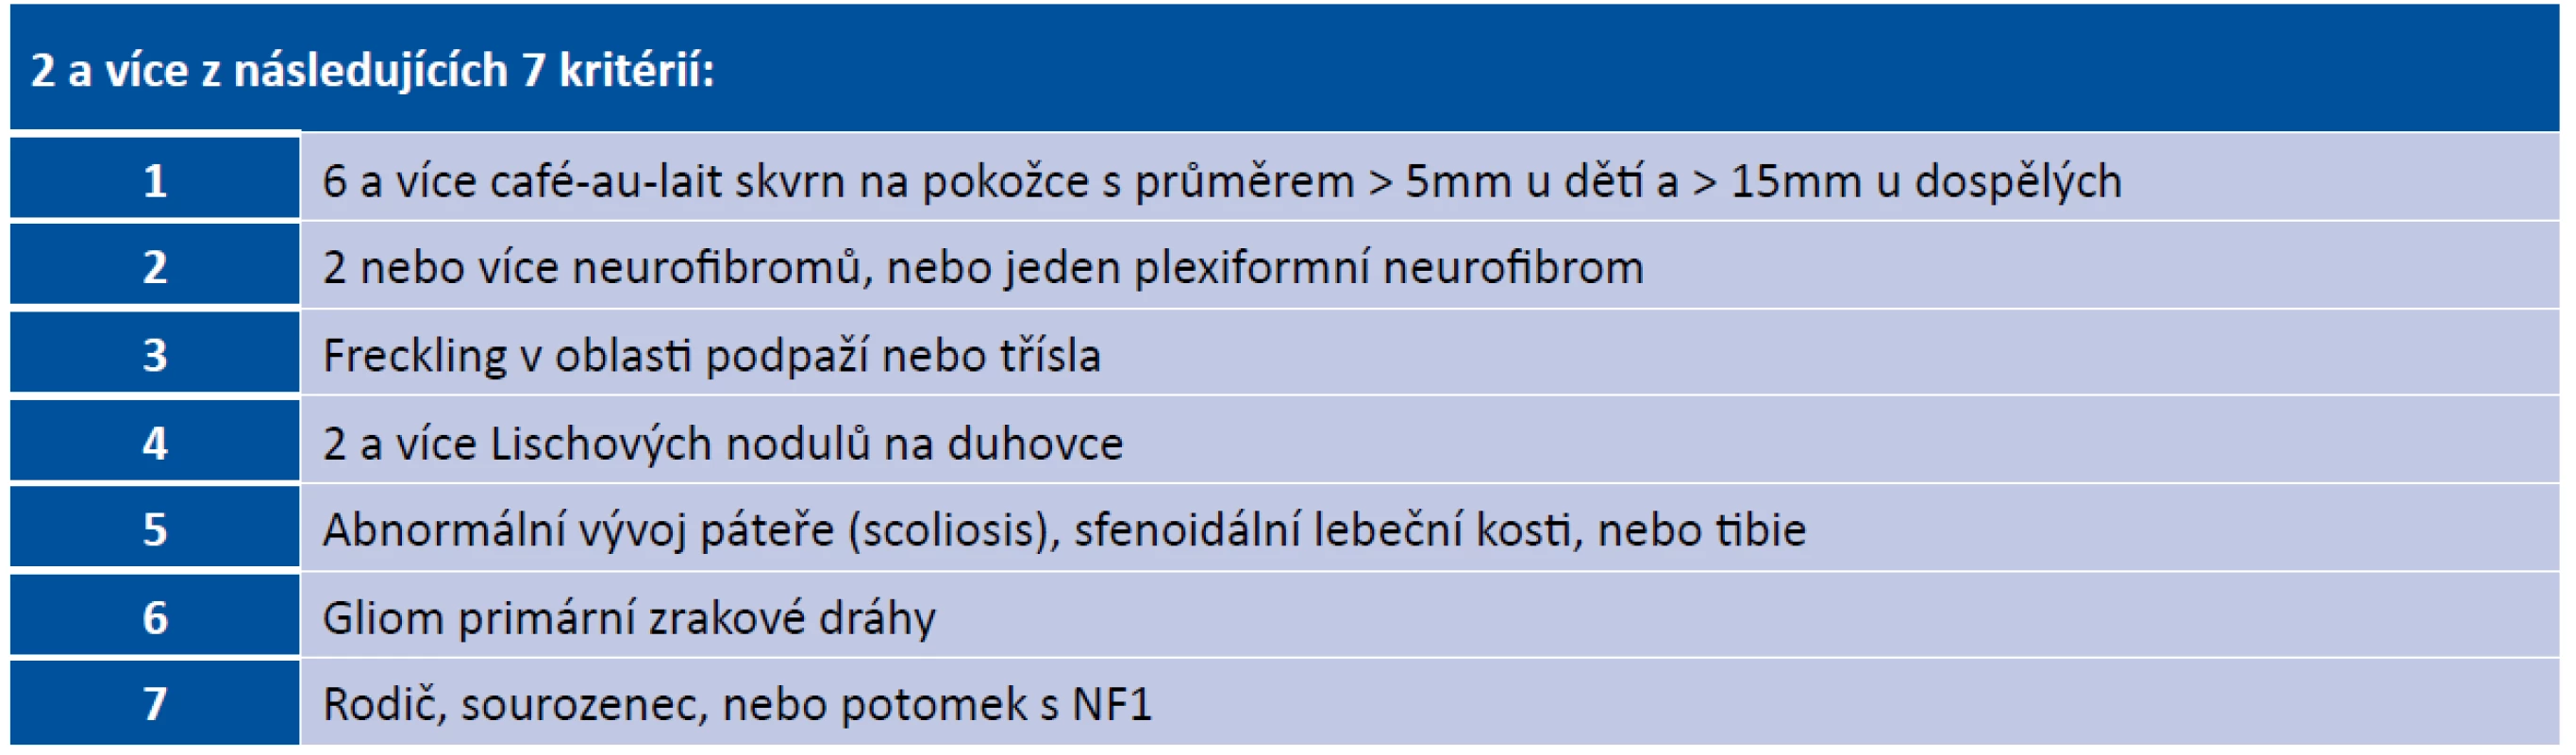 Neurofibromatóza 1. typu - diagnostická kritéria<br>
National Institute of Neurological Disorders and Stroke: Neurofibromatosis Fact Sheet (USA), 2011 [41]